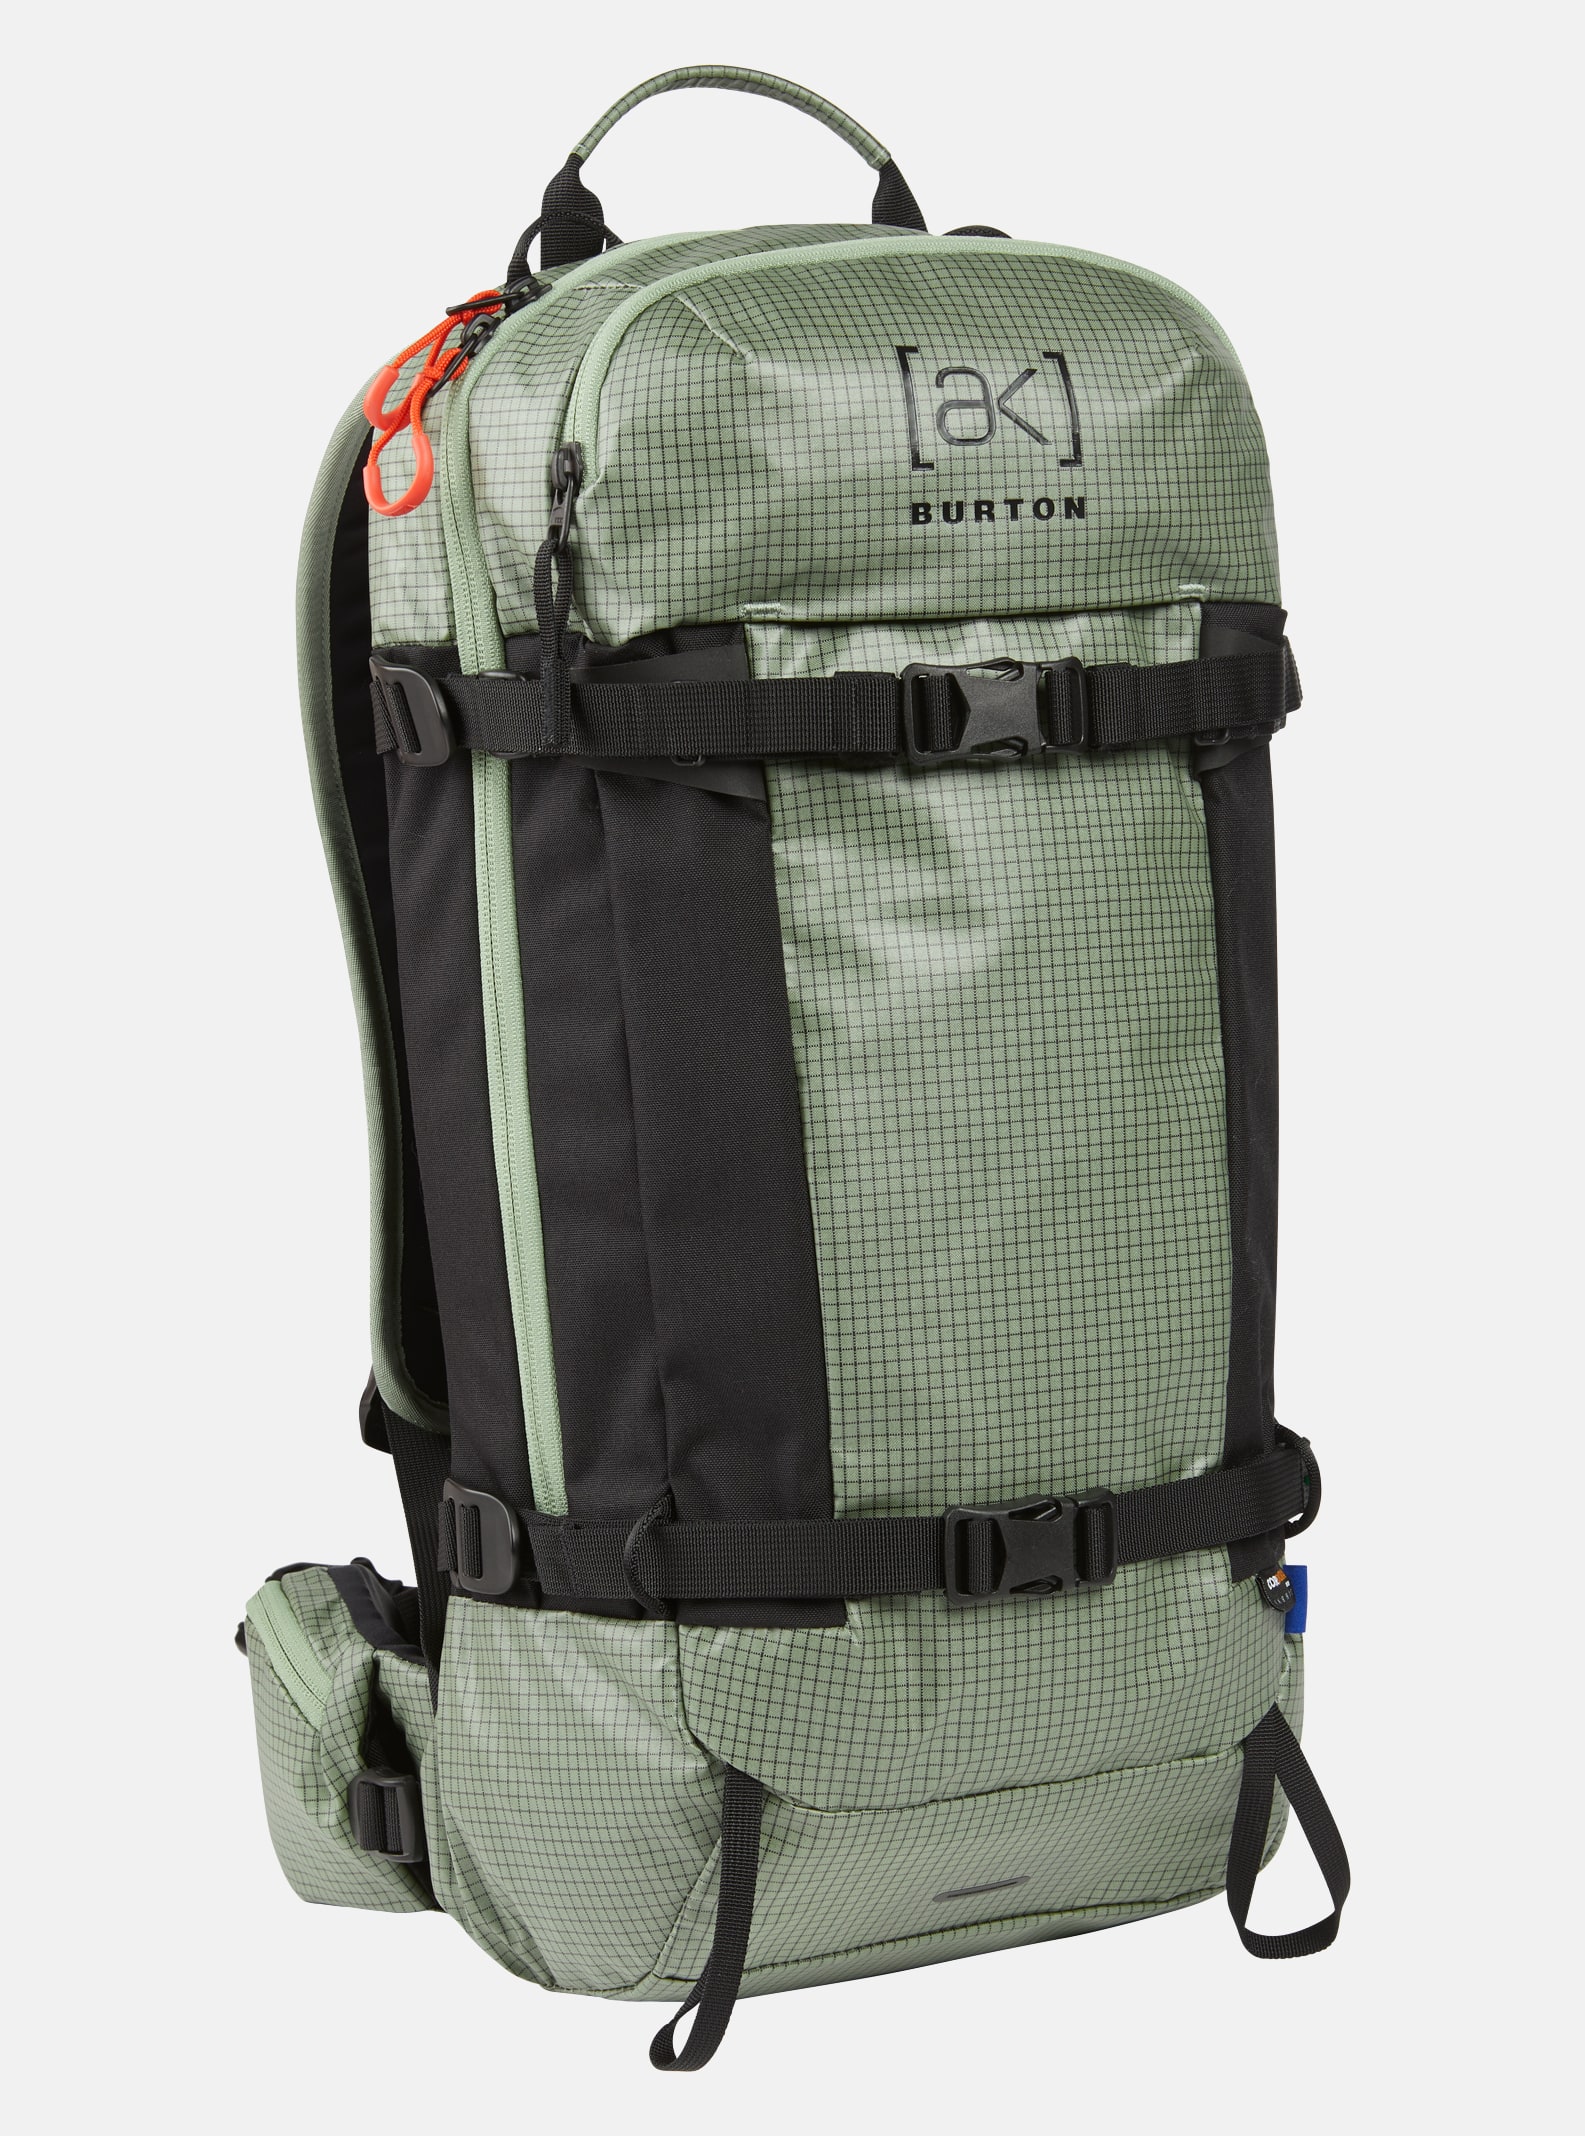 ak] Dispatcher 18L Backpack | Burton.com Winter 2023 US